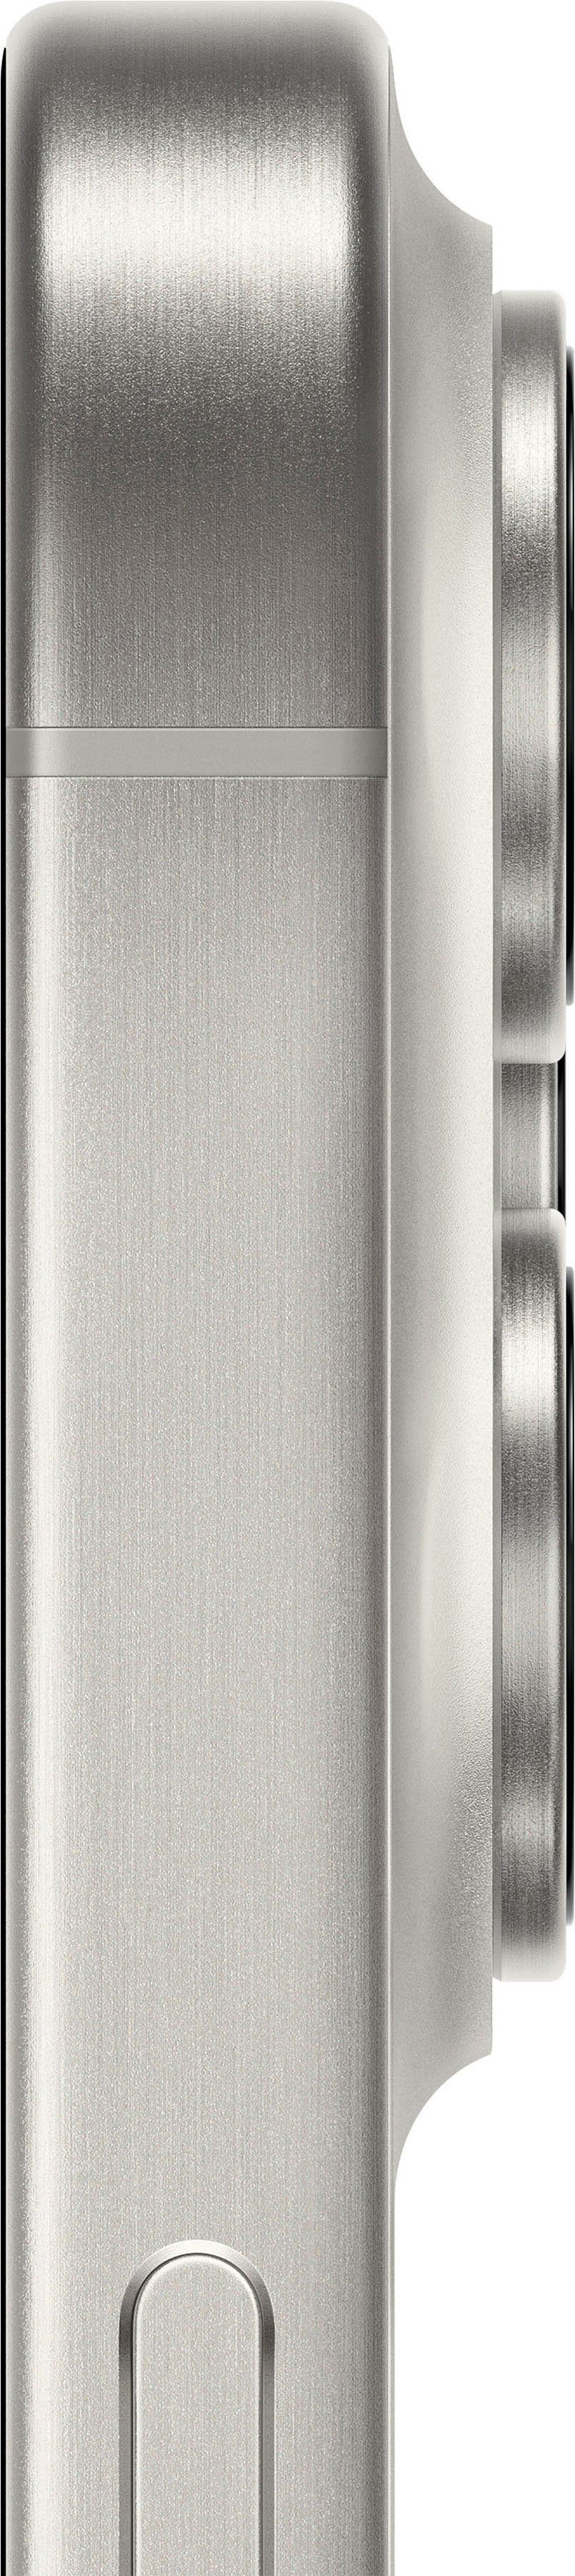 titanium 48 Apple Zoll, Speicherplatz, white MP Pro Smartphone (15,5 cm/6,1 15 512 Kamera) 512GB GB iPhone